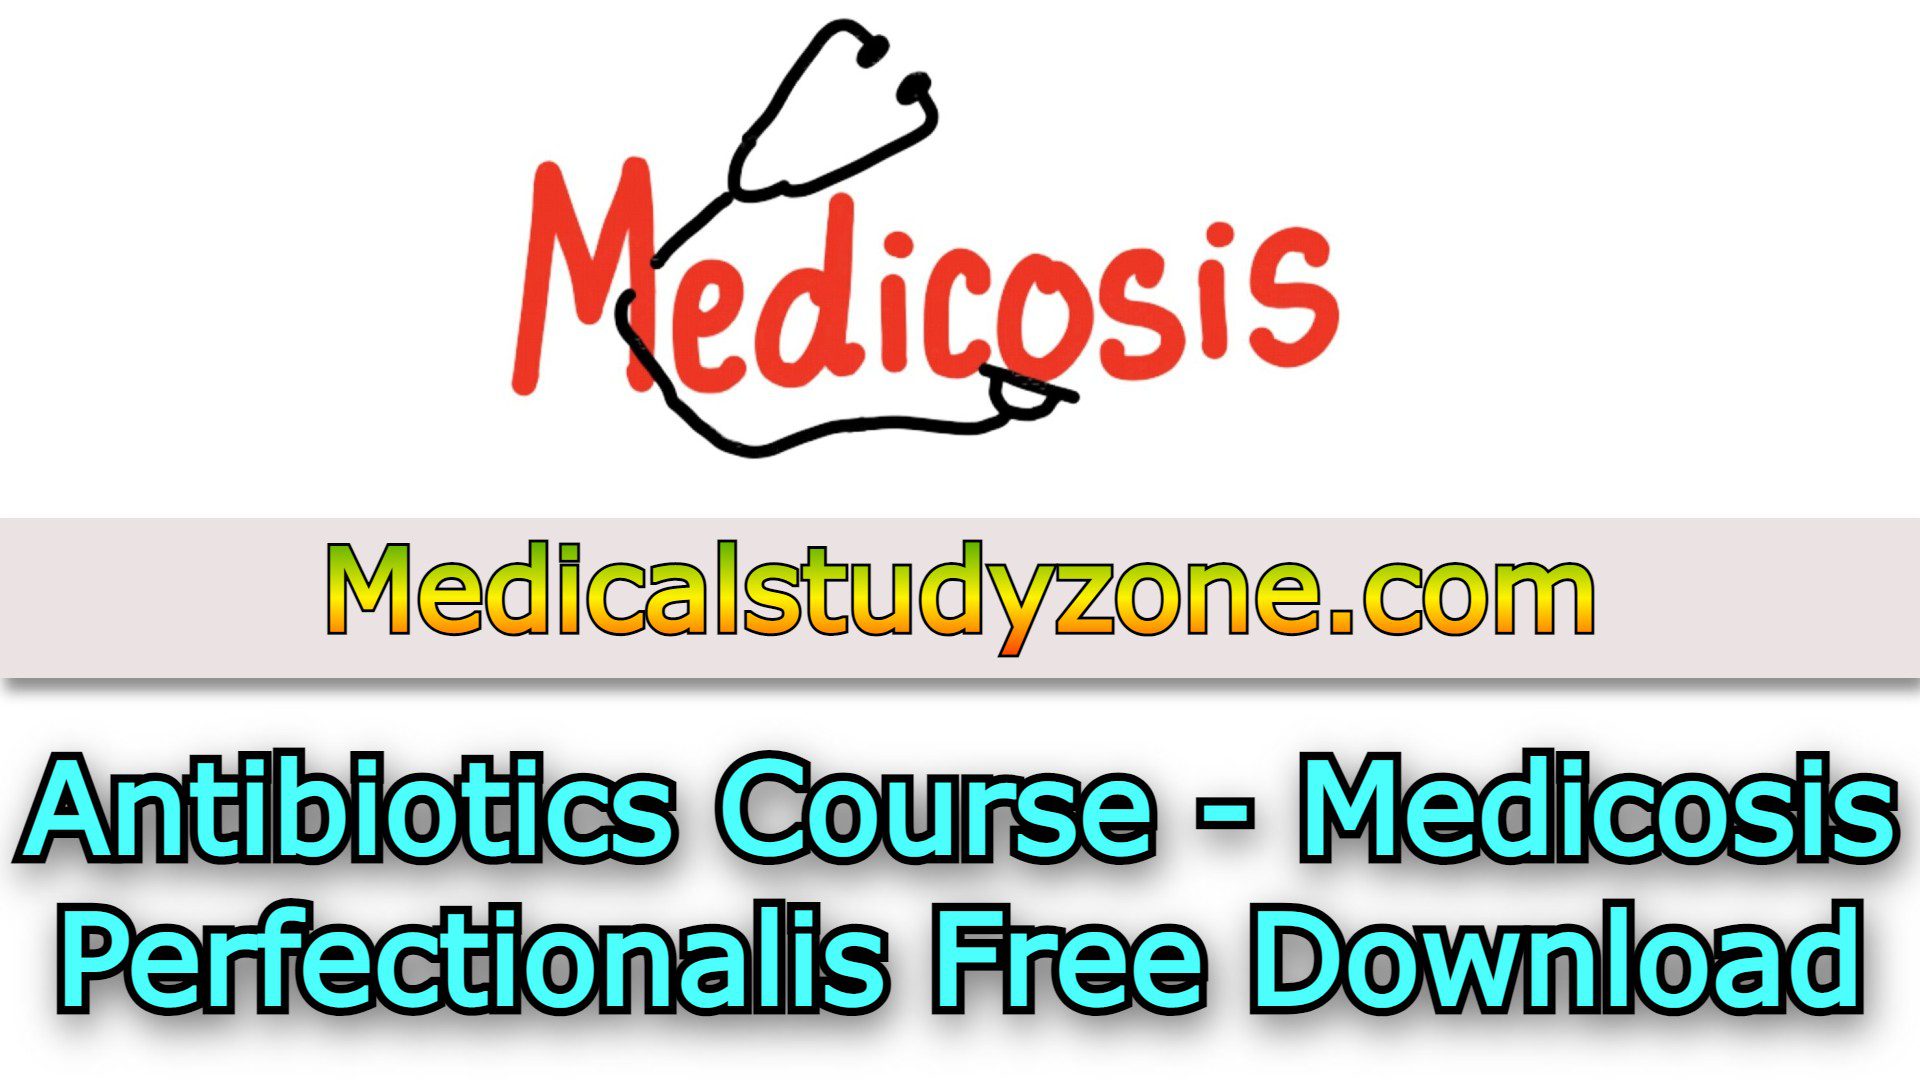 Antibiotics Course 2022 - Medicosis Perfectionalis Free Download